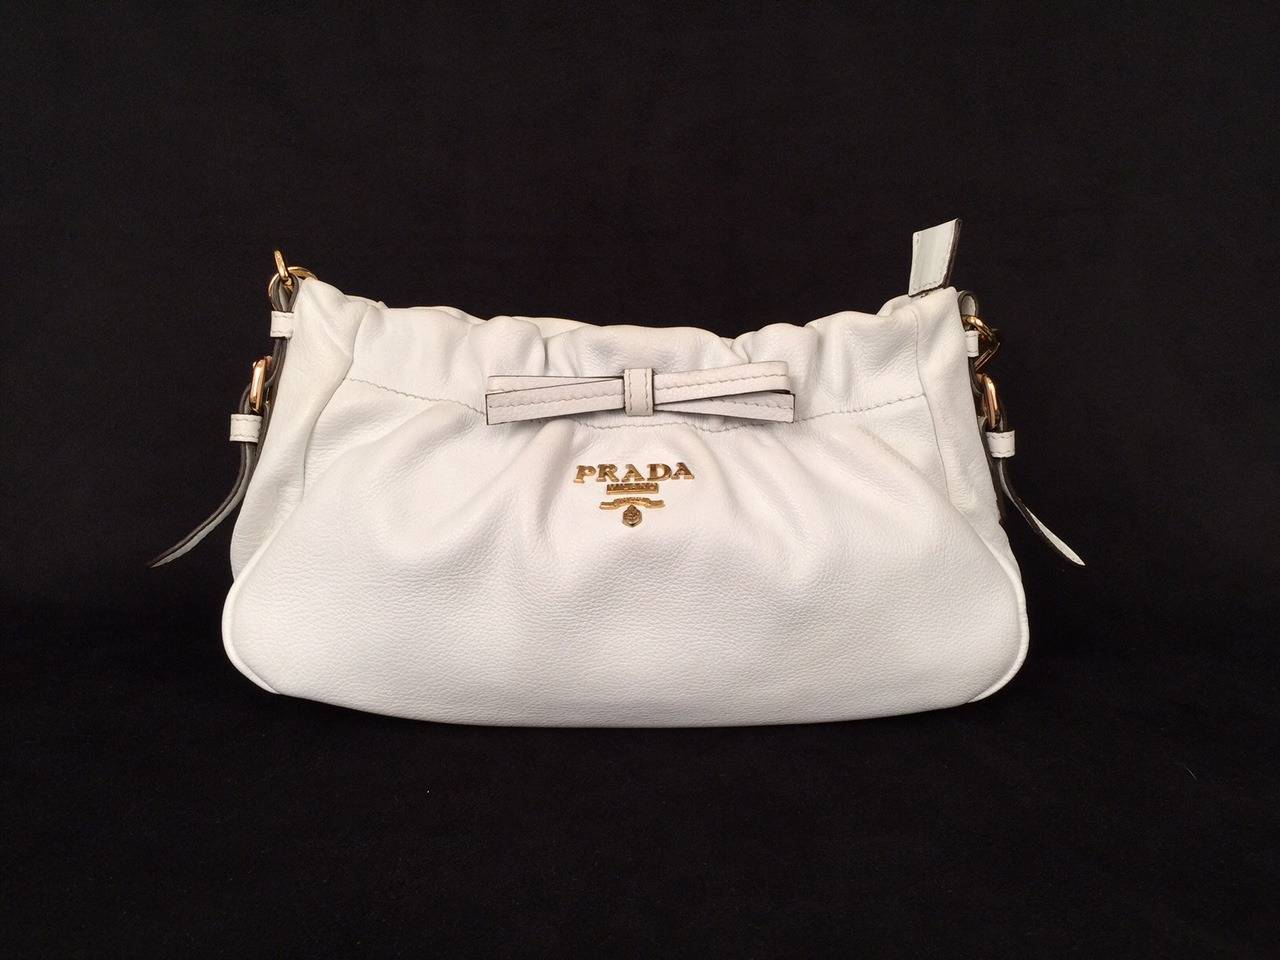 Prada White Satchel Bag with Detachable Shoulder Strap For Sale 2